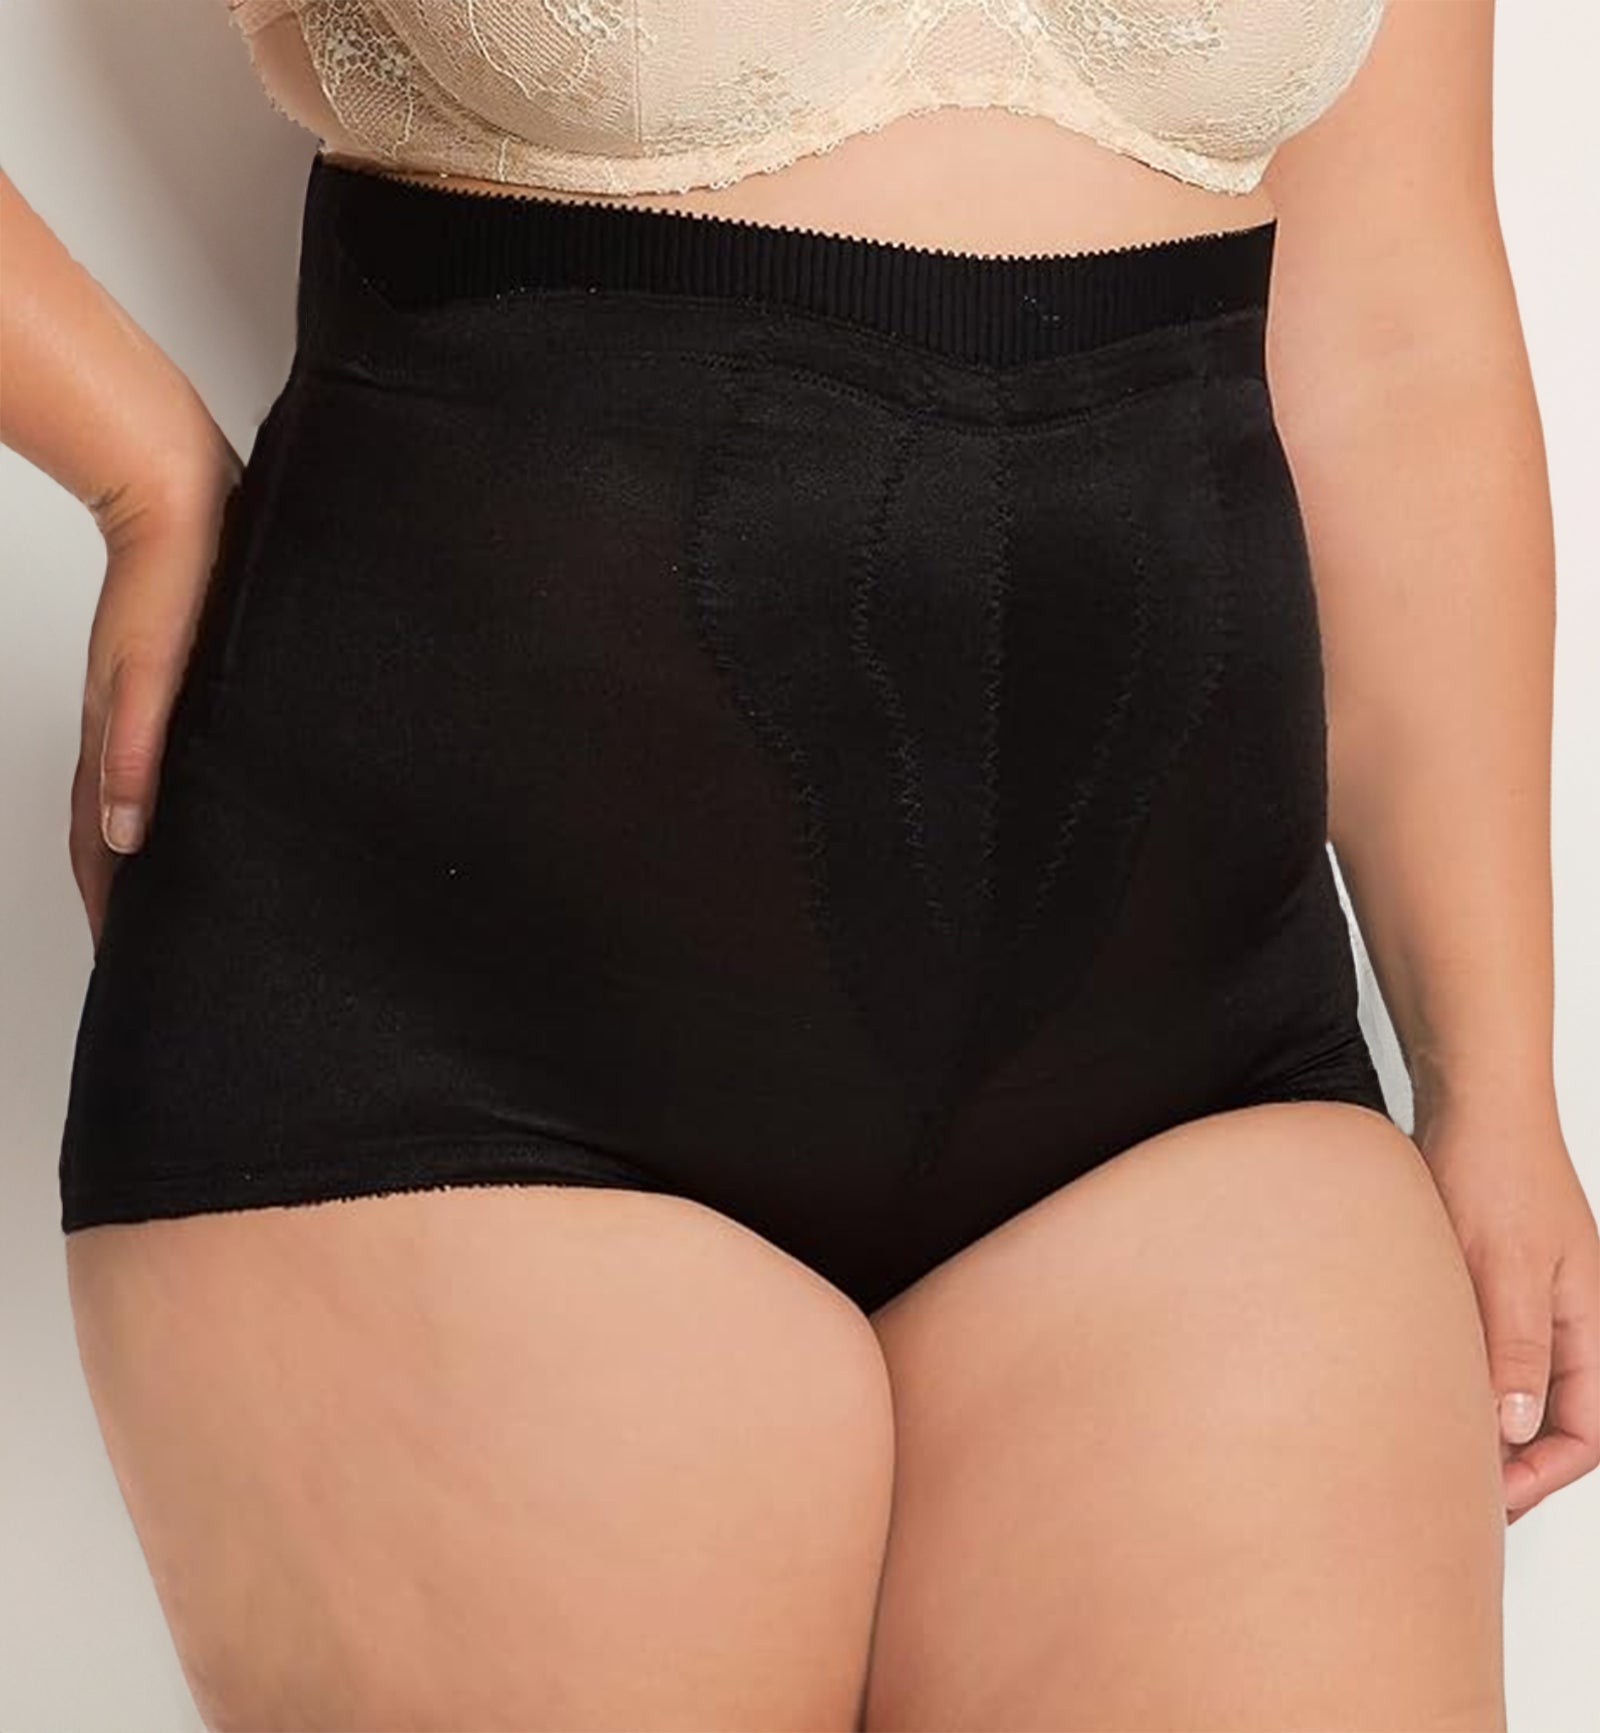 Rago Medium Control High Waist Shaping Panty (6296),Small,Black - Black,Small